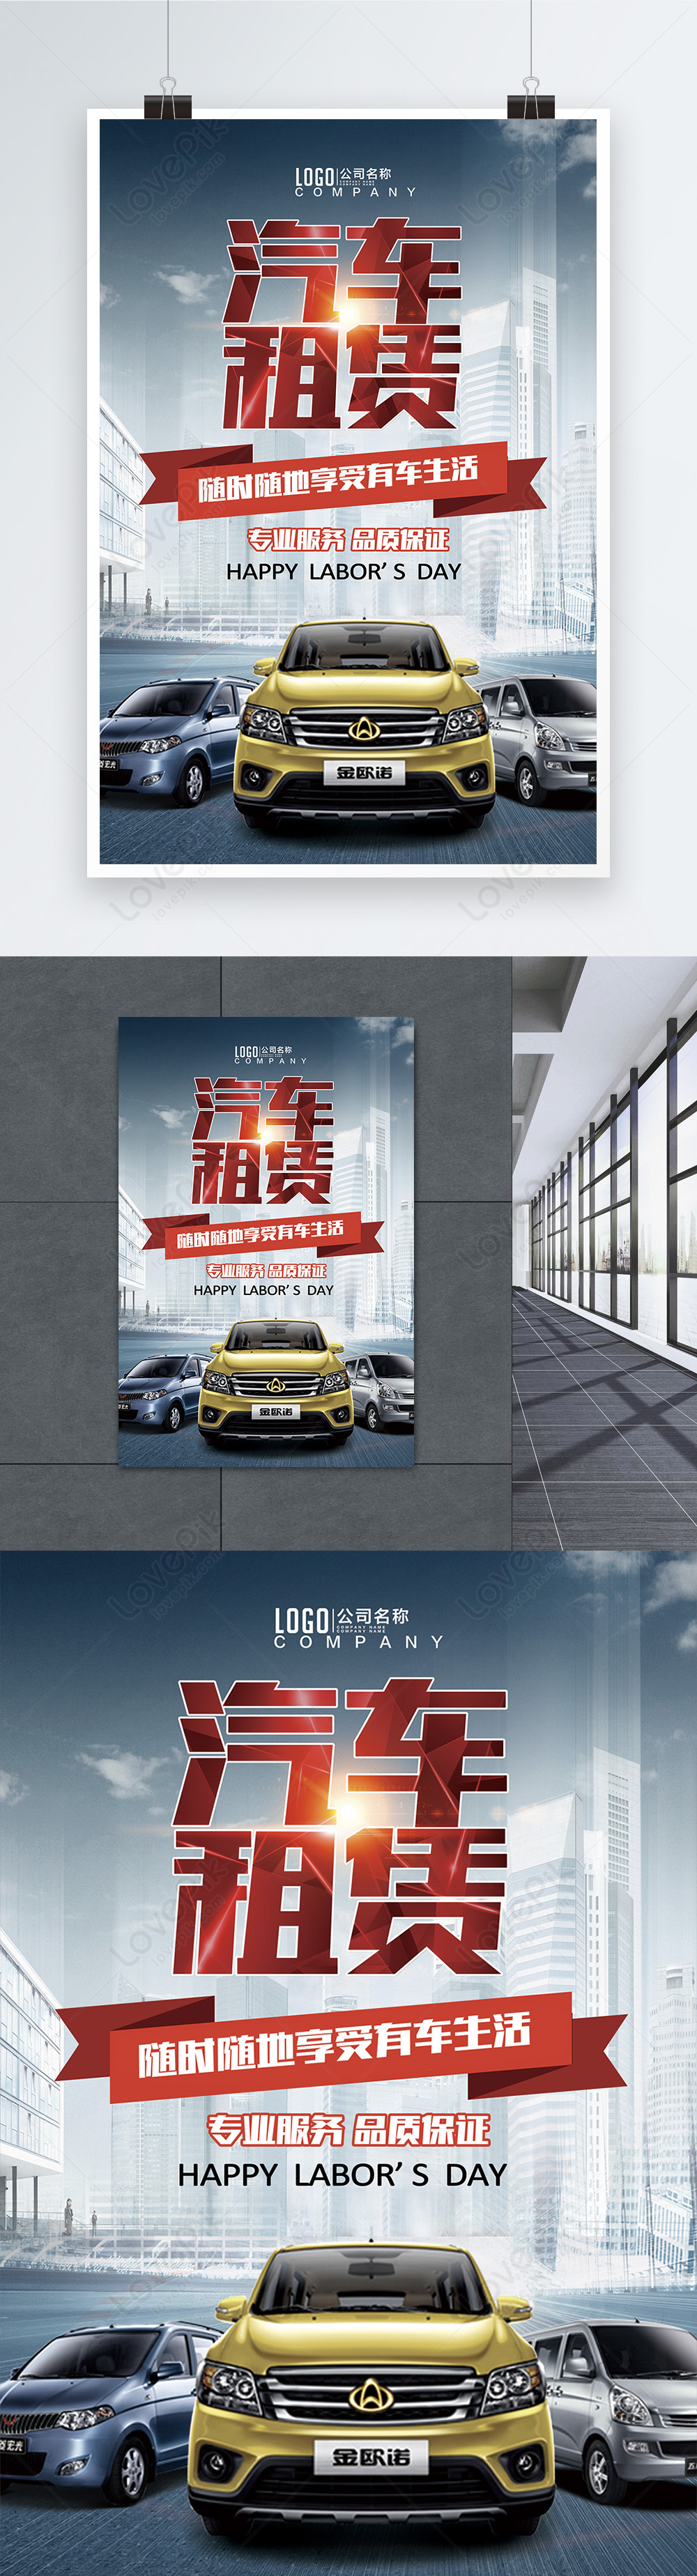 automotive-car-rental-poster-template-car-sale-social-media-post-design